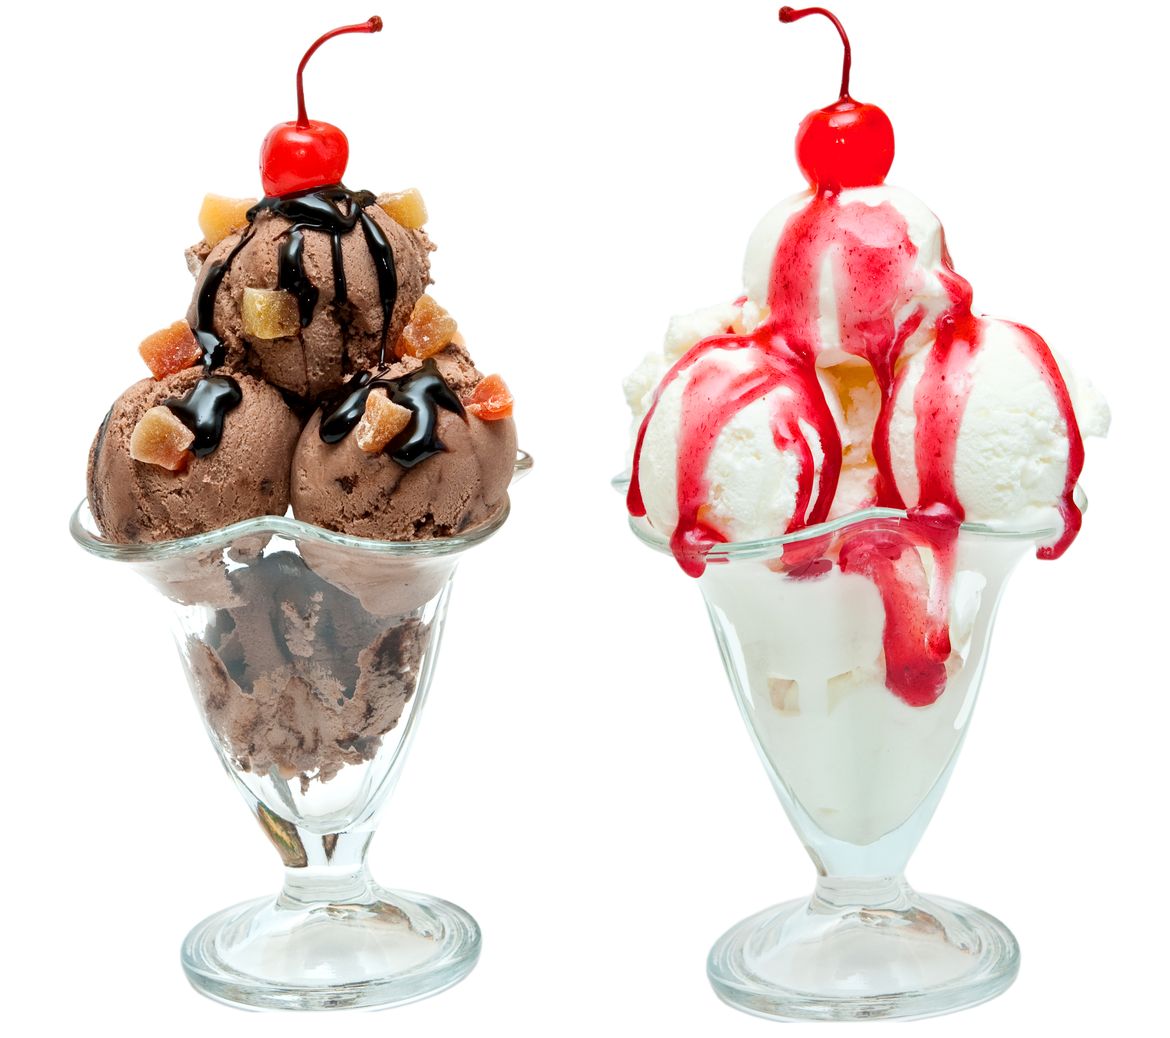 Ice Cream Sundaes with chocolate and vanilla ice cream